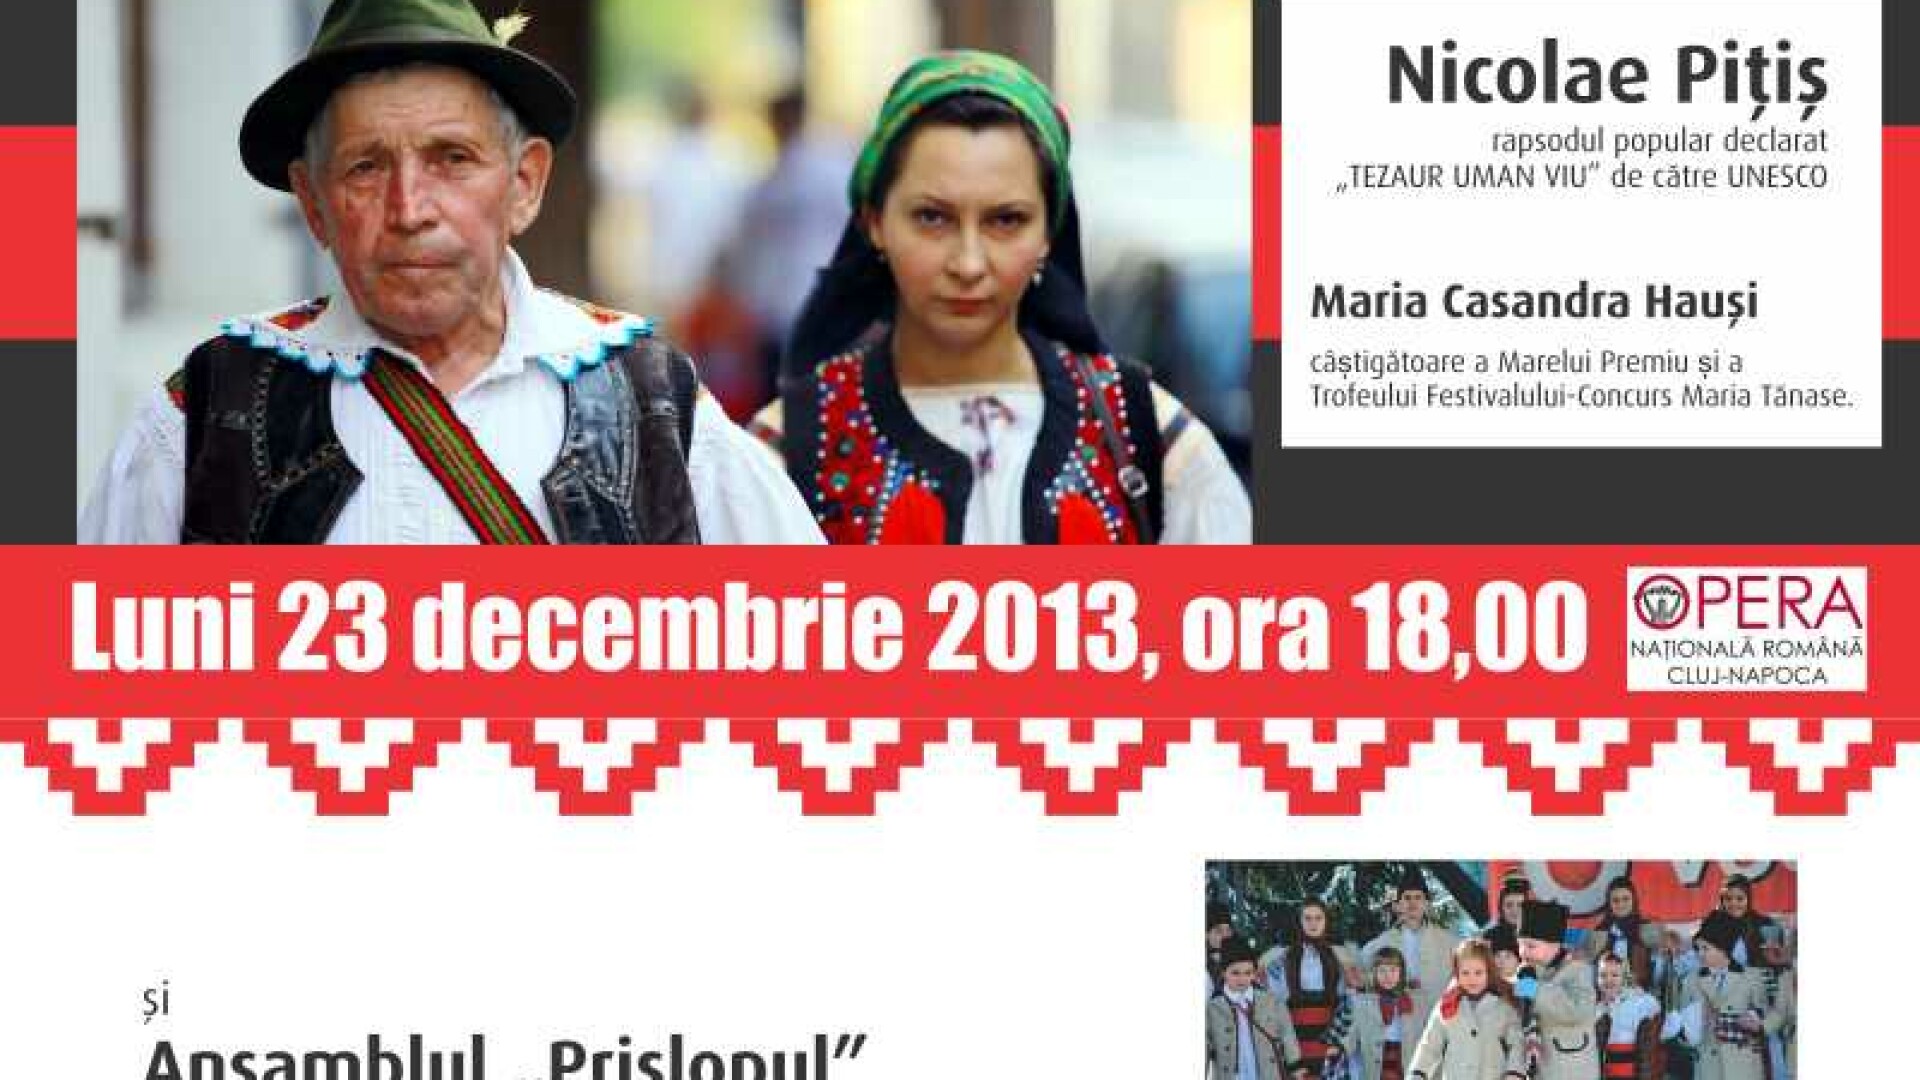 Nicolae Pitis, numit tezaur uman viu, revine la Cluj de Craciun-->